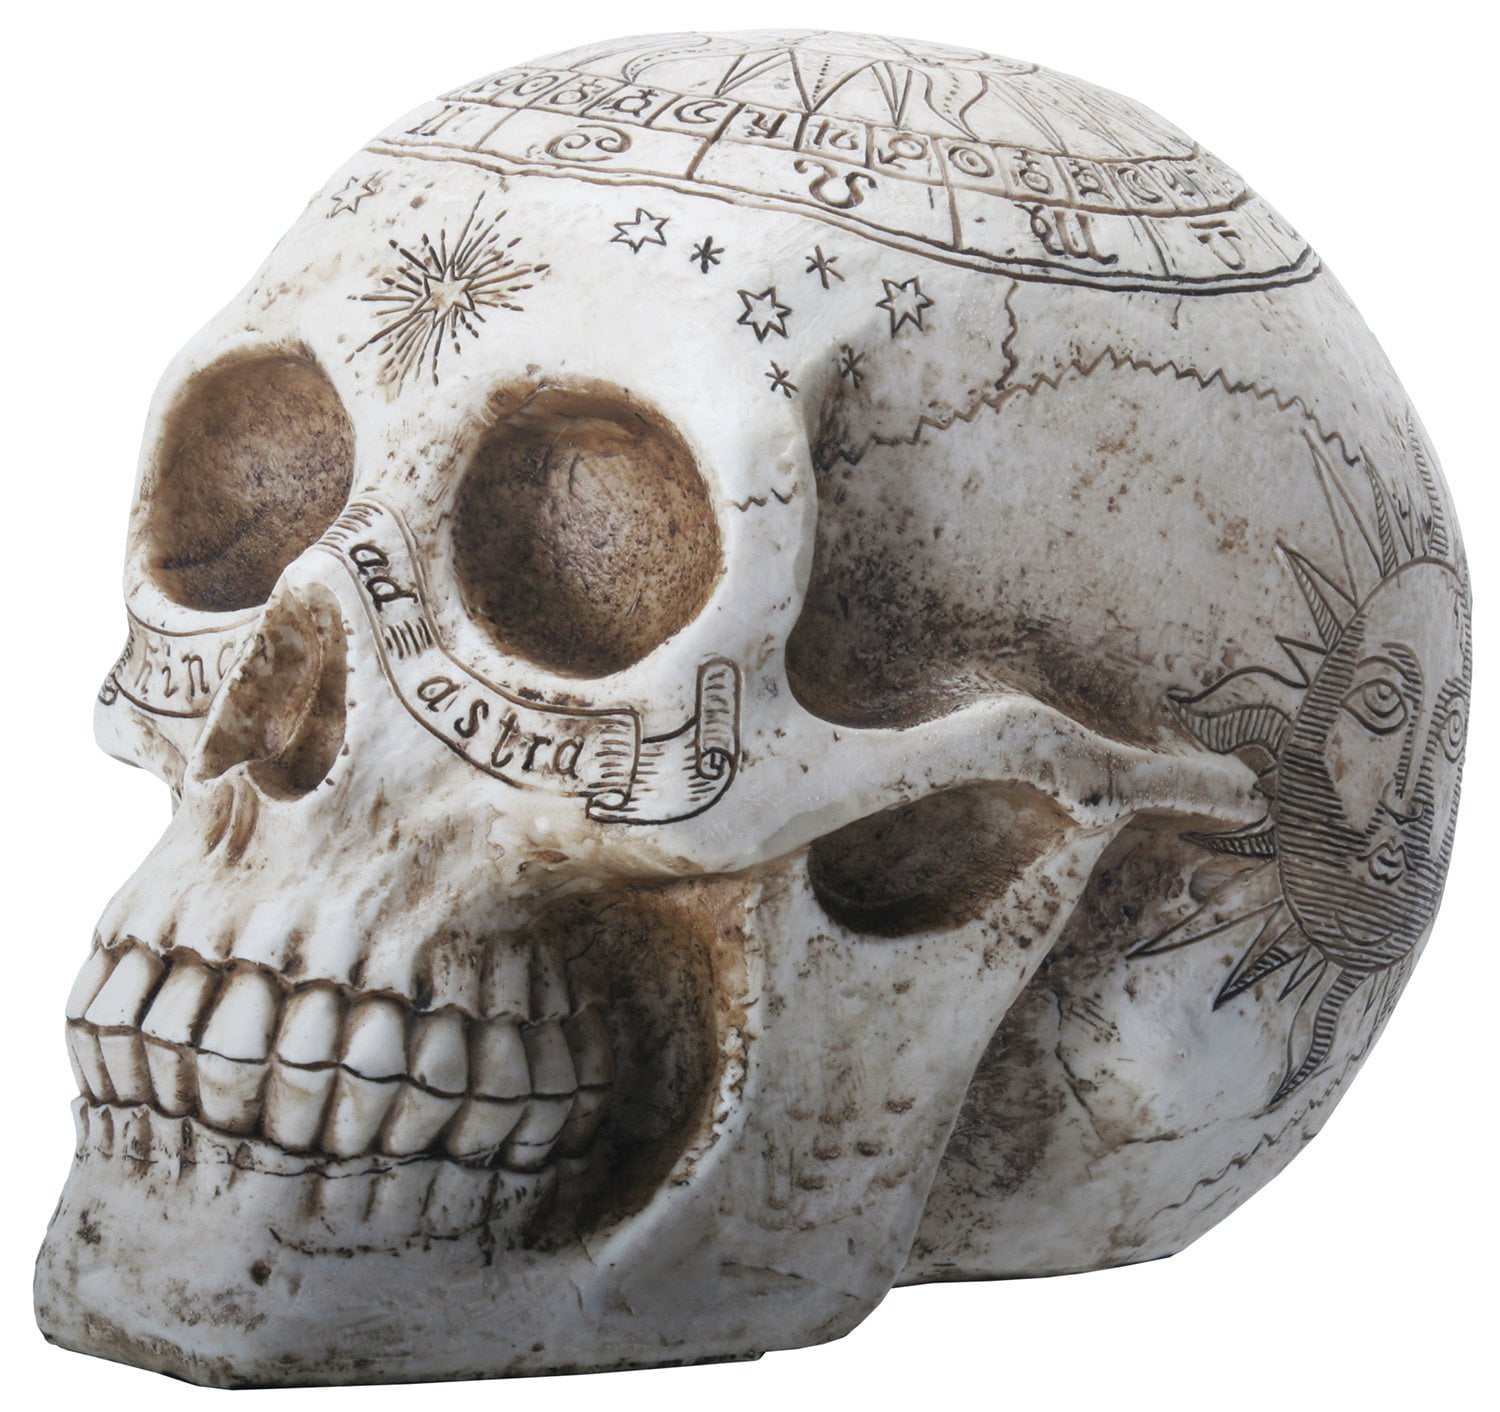 Skull with Axe in Head Figurine Statue Skeleton Halloween 